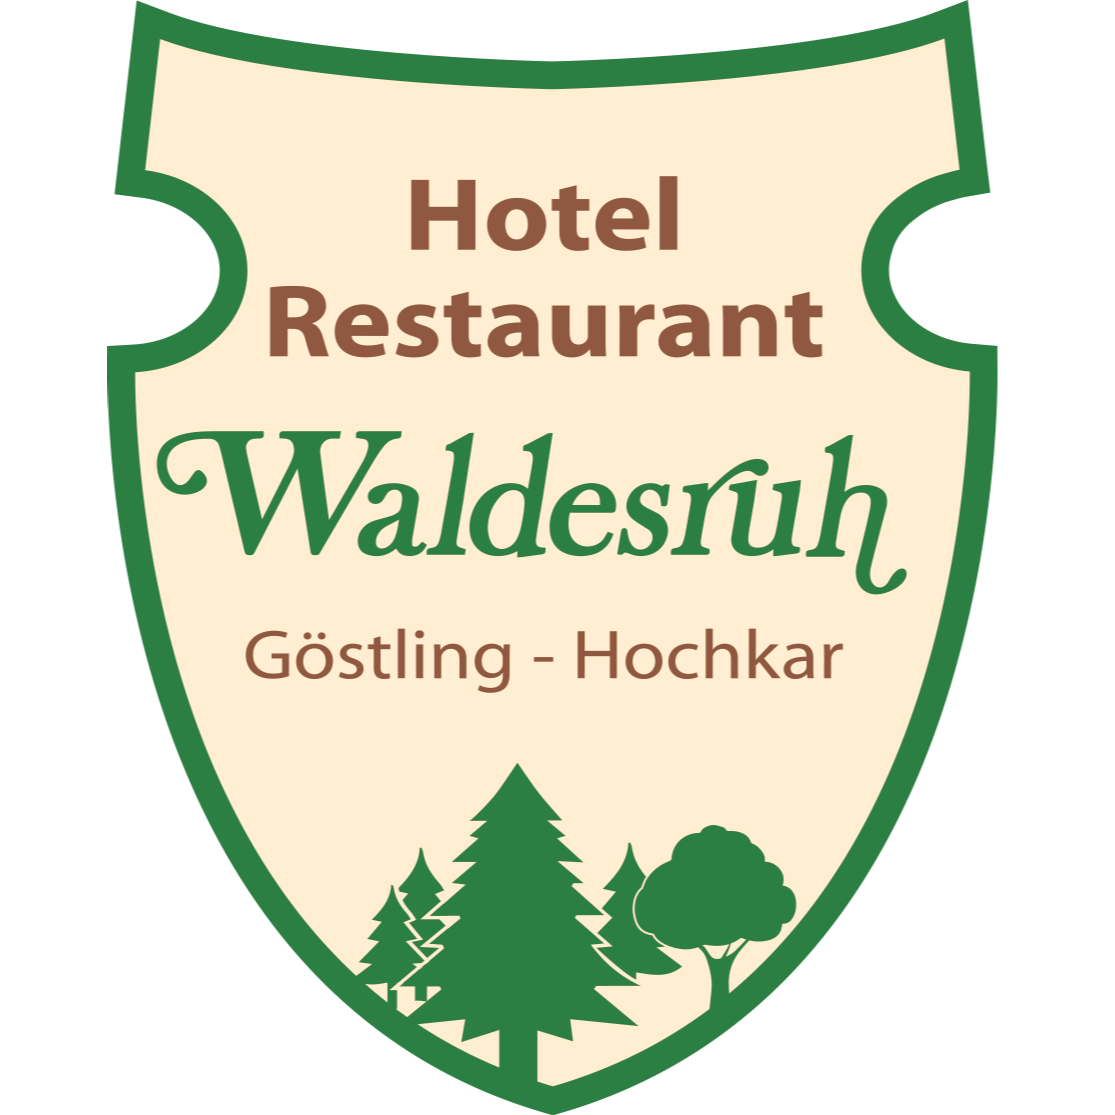 Hotel Waldesruh Otmar Vielhaber Logo